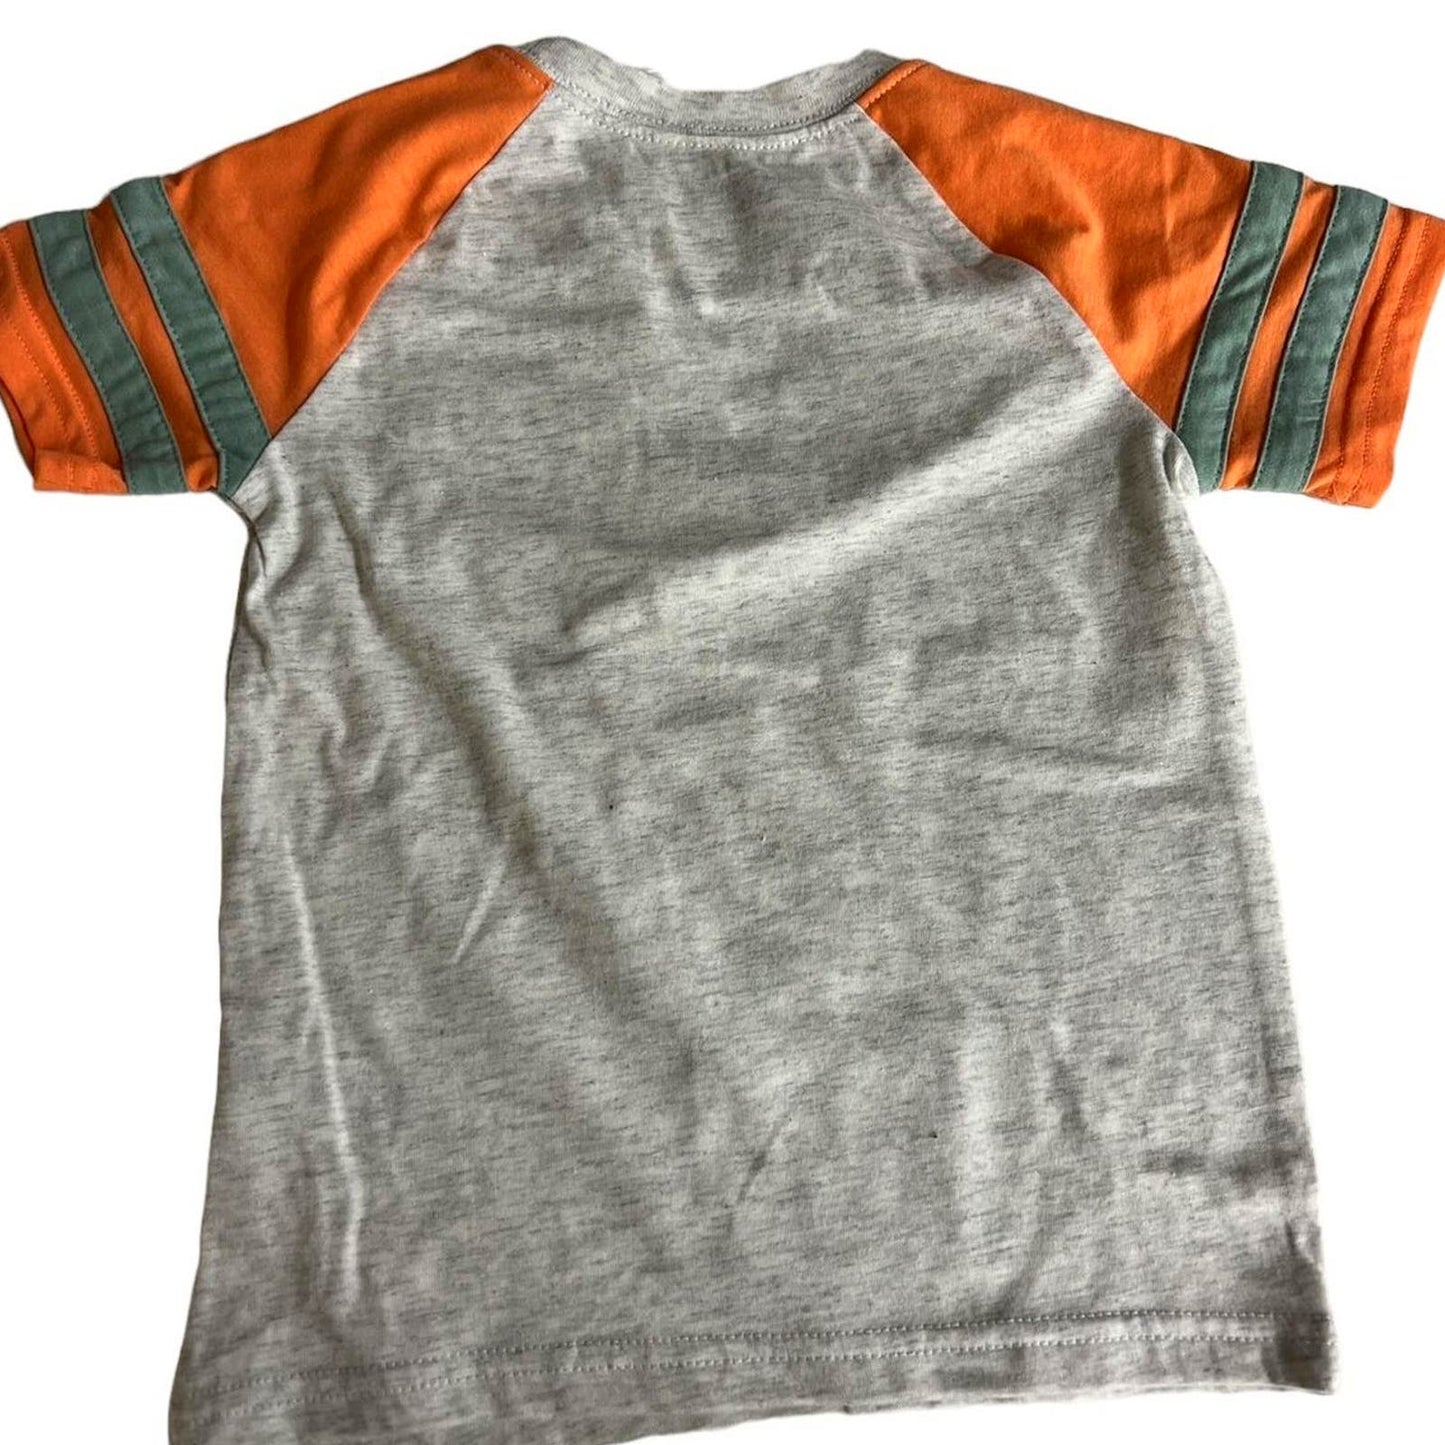 OshKosh B'gosh Toddler Boys' Knit Colorblock S/S Henley T-Shirt - Orange 4T